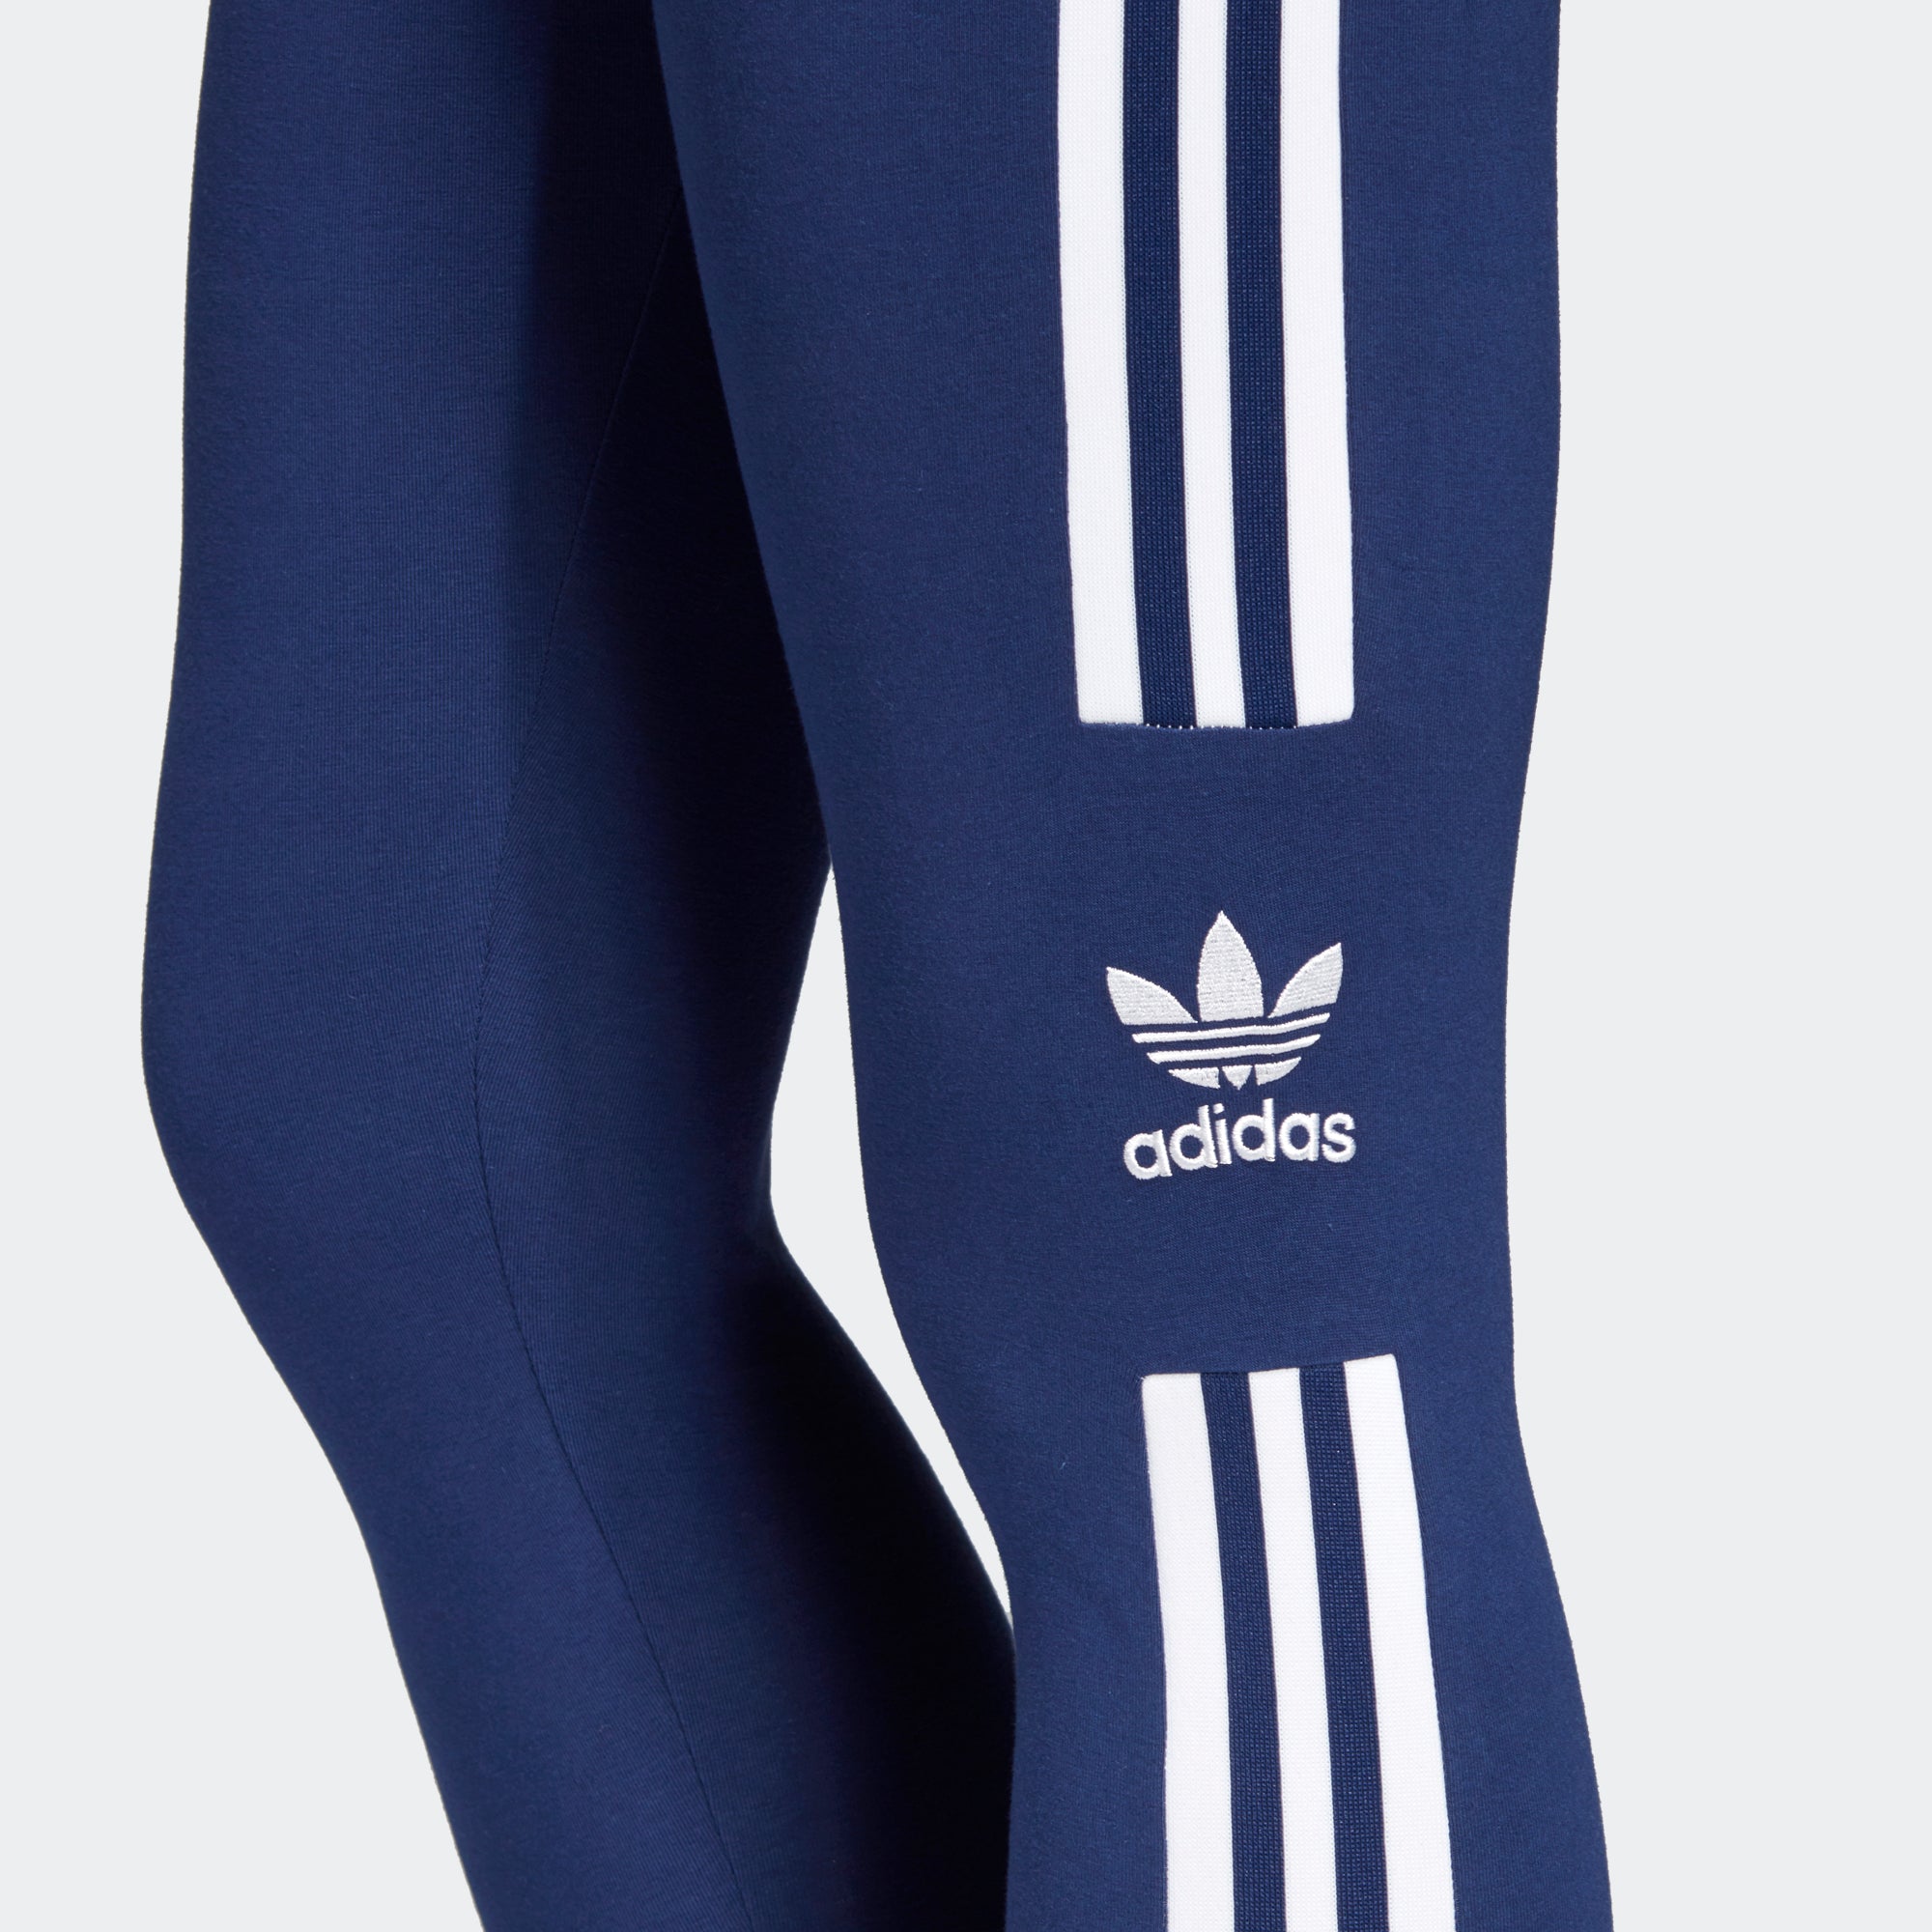 dark blue adidas leggings